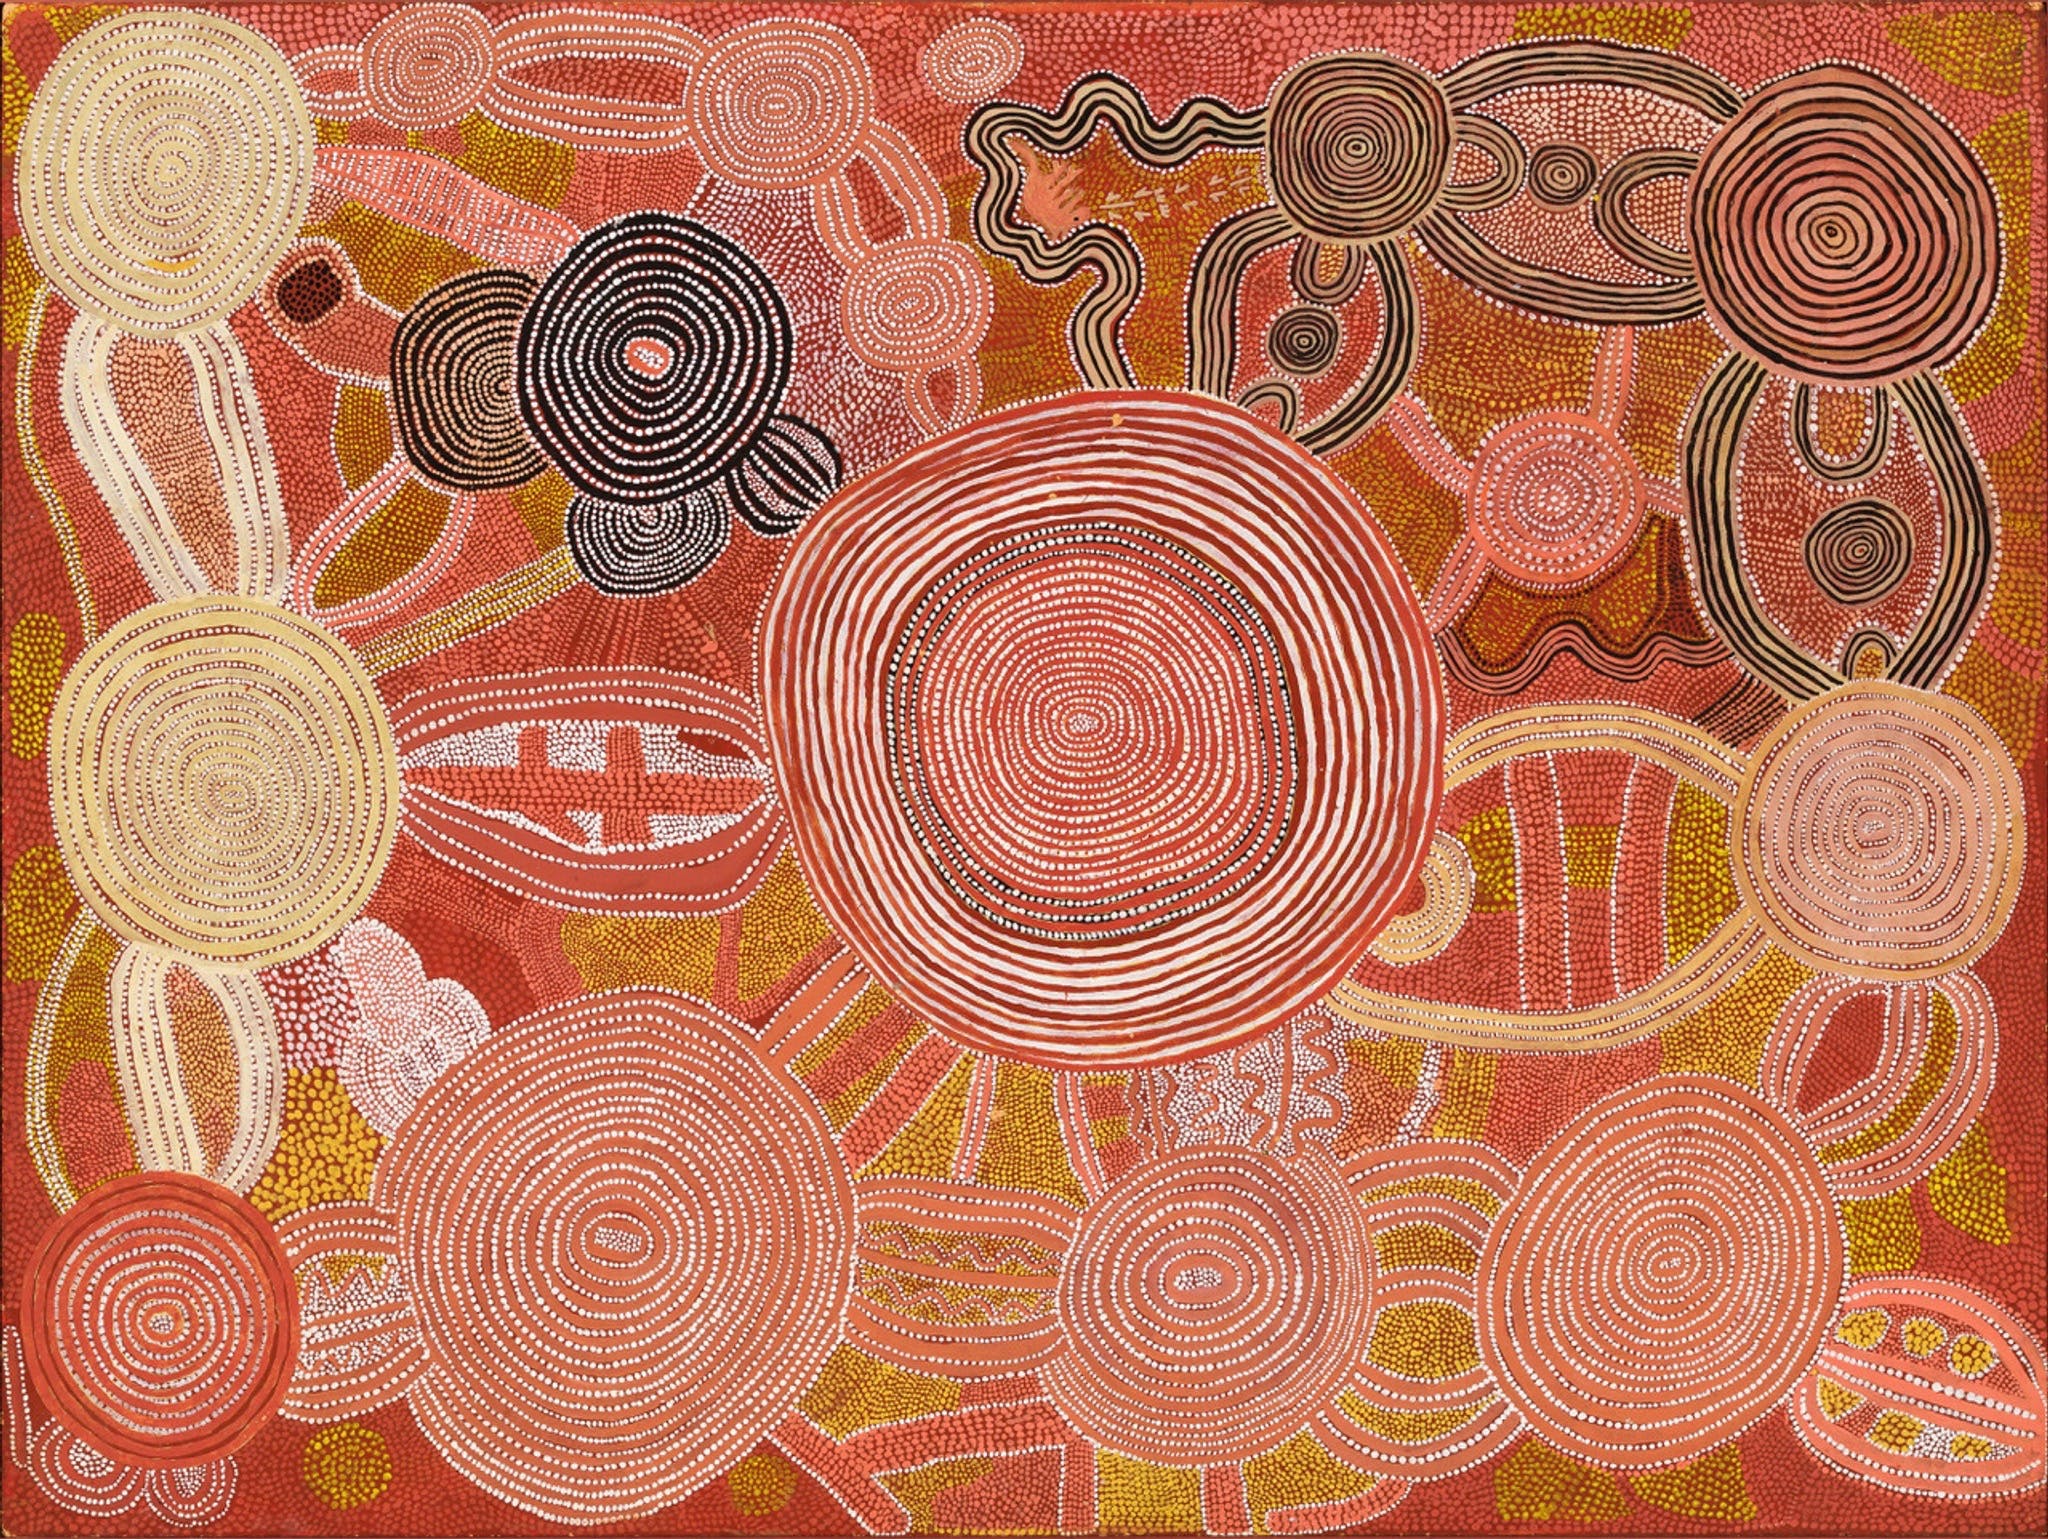 Reverence Exhibition of Australian Indigenous Art - Pubs Sydney